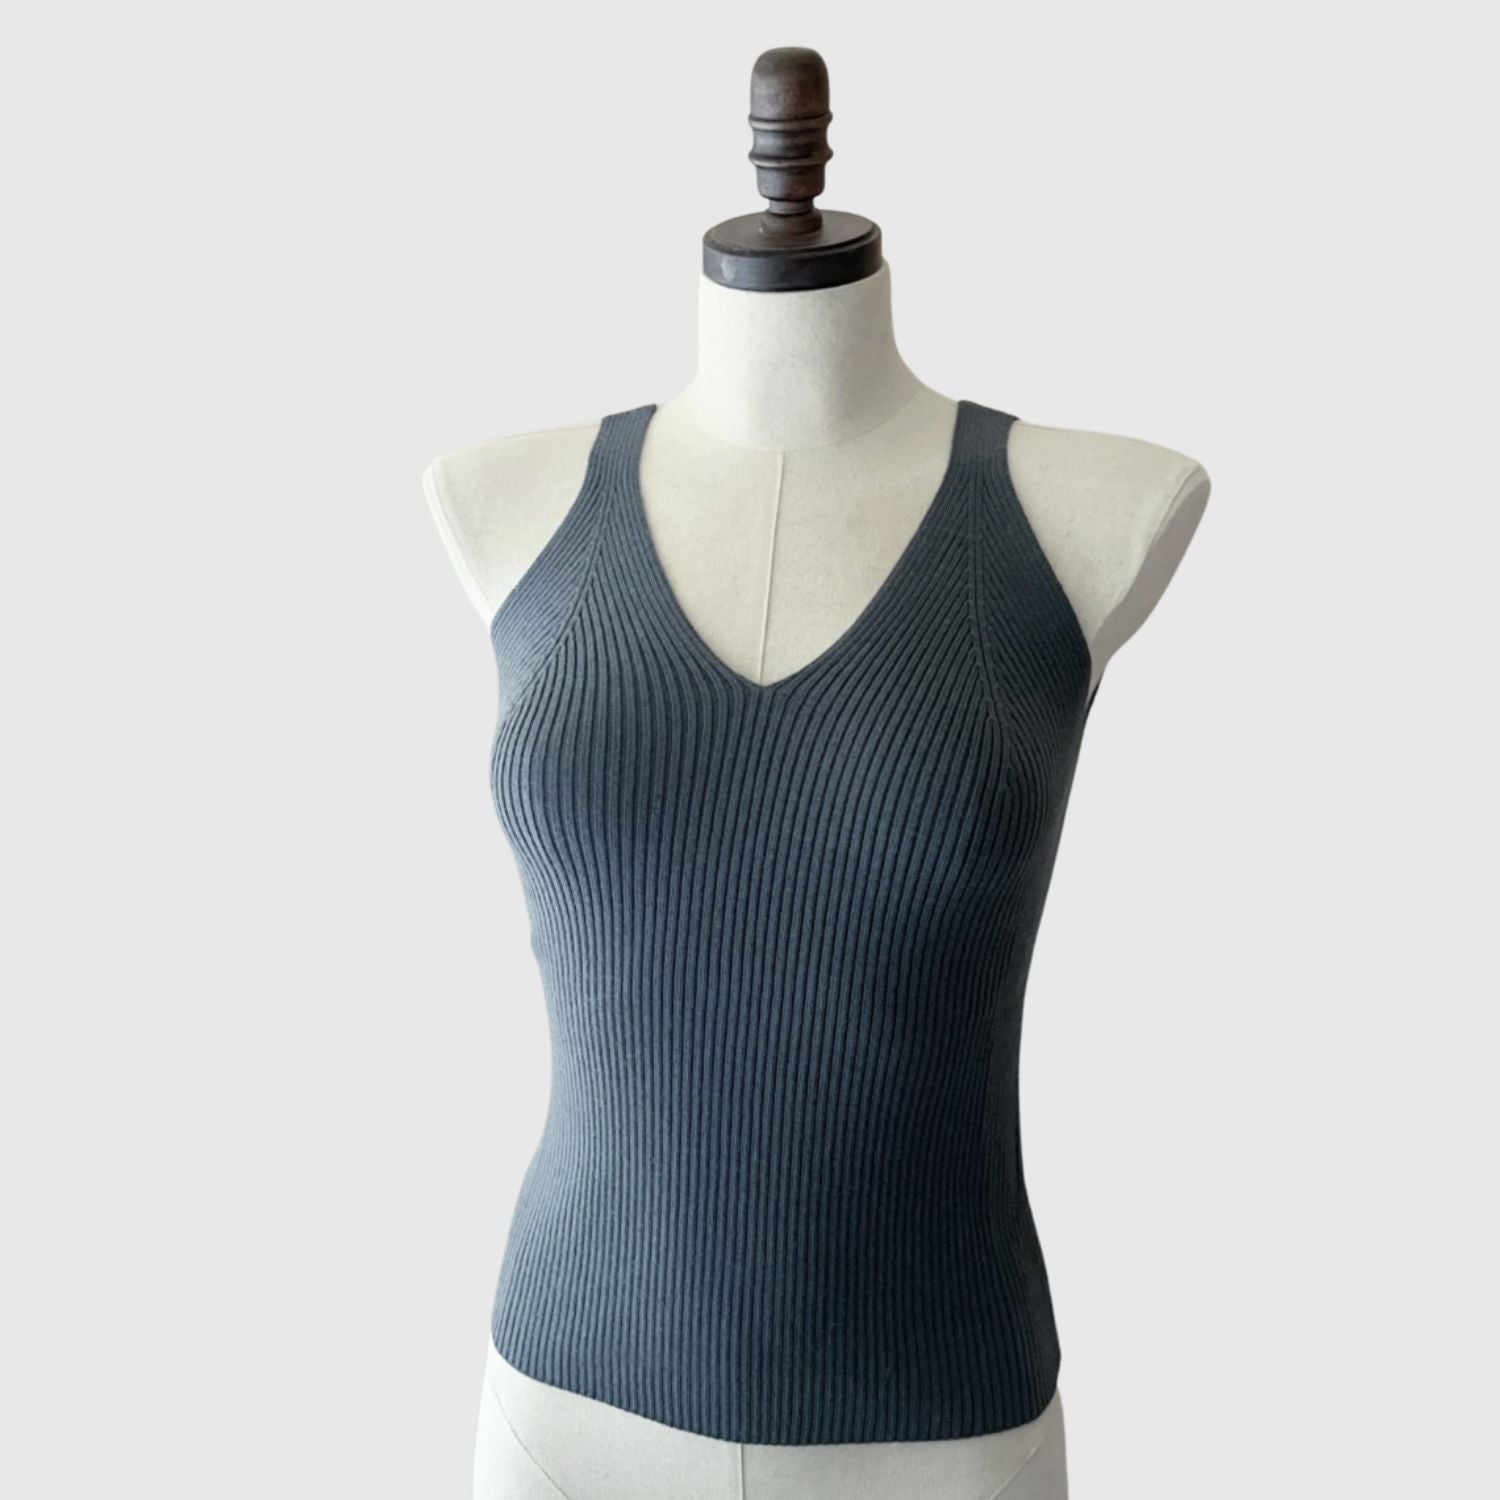 Grey merino wool tank to for ladies | shop merino wool apparel from Canada 